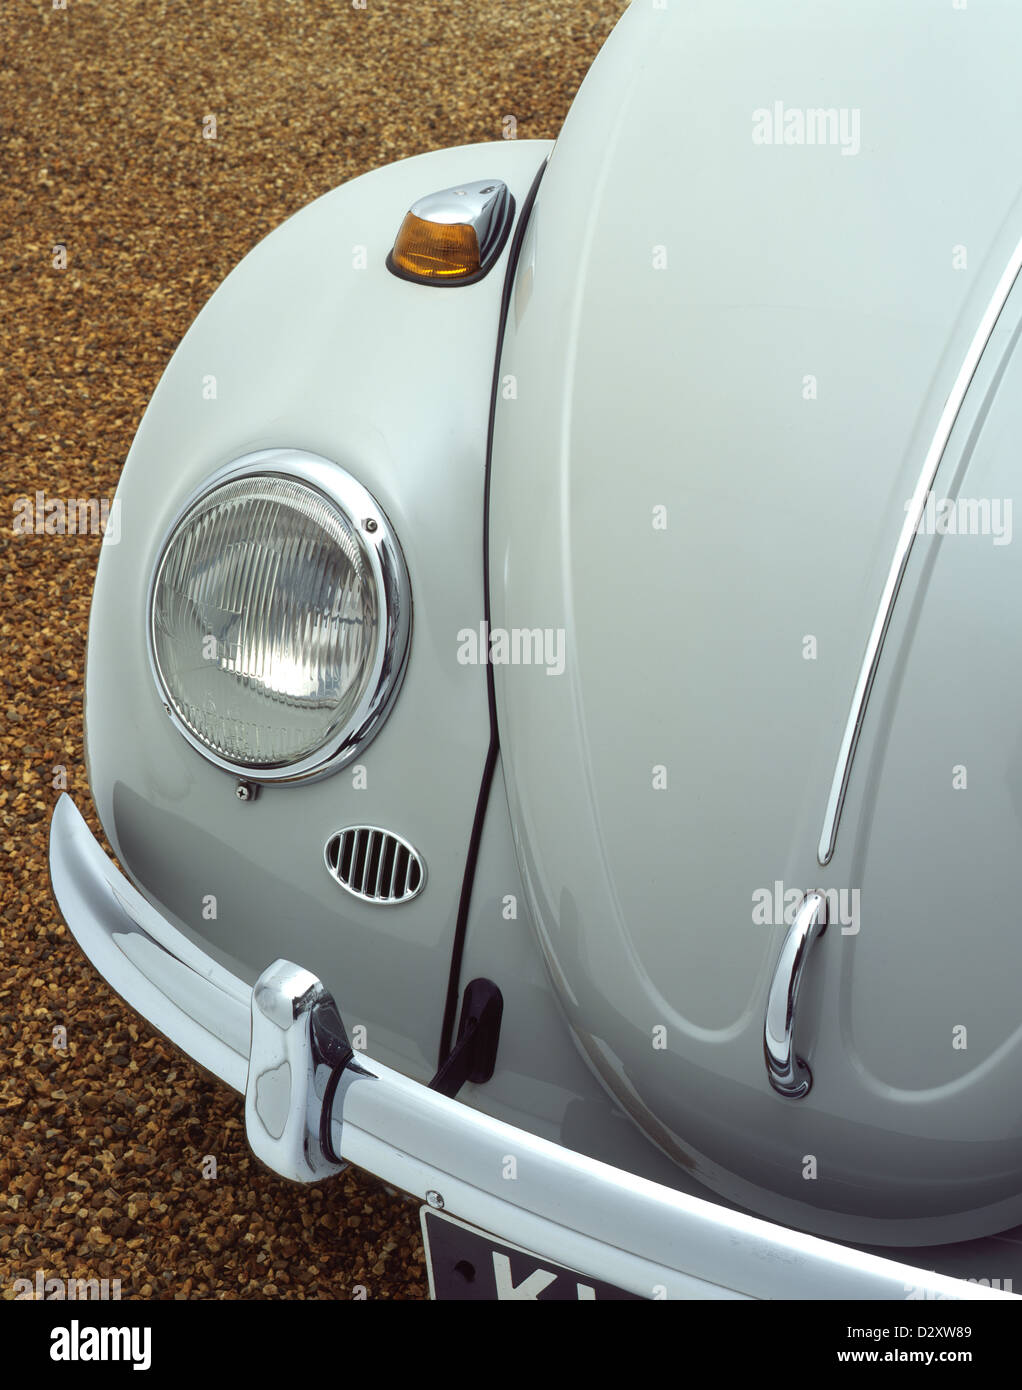 Bonnet, mudguard, headlight VW beetle Stock Photo